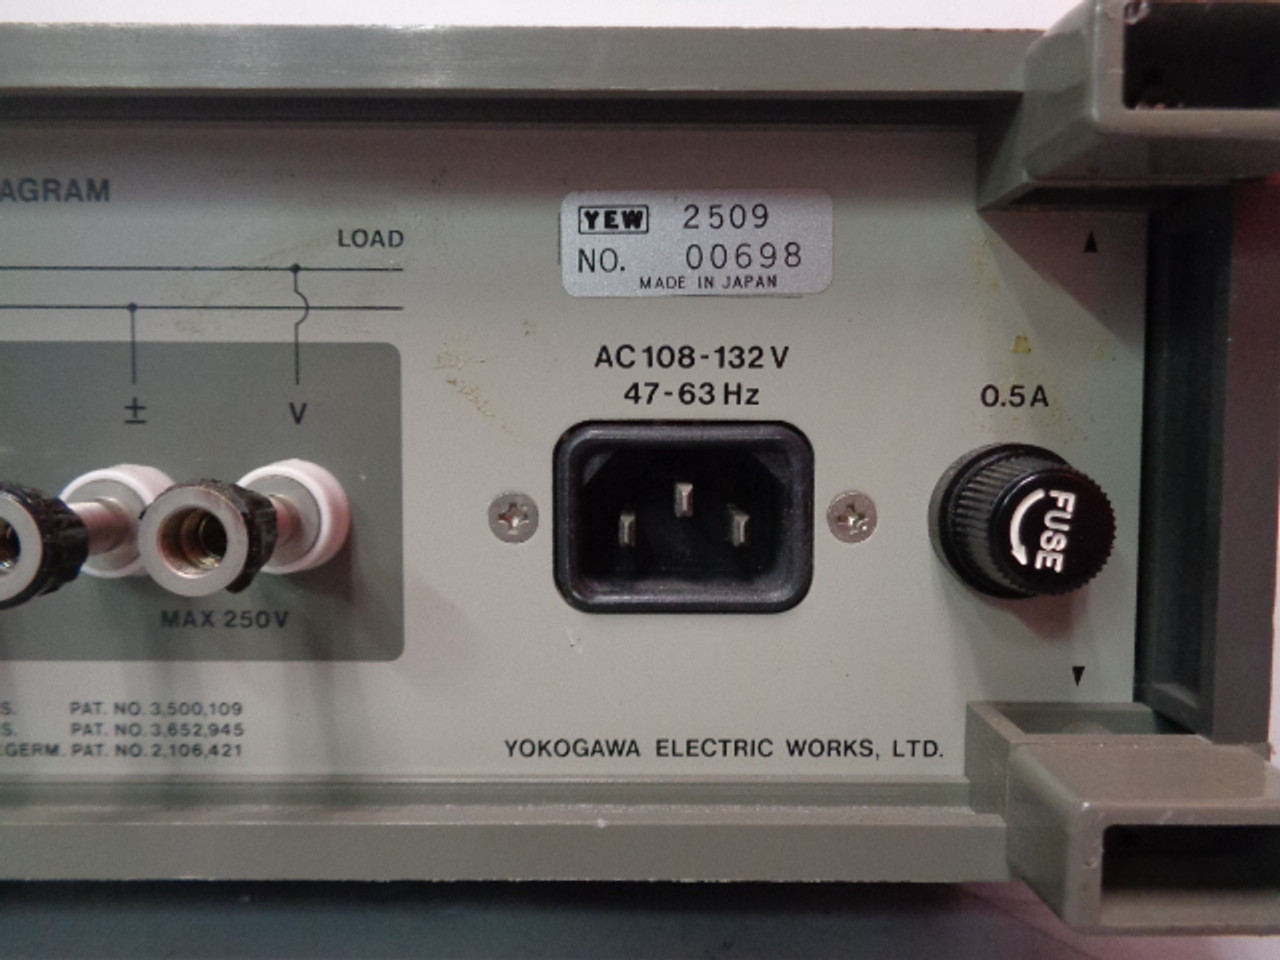 Yokogawa Electric Works Type 2509 Digital Wattmeter